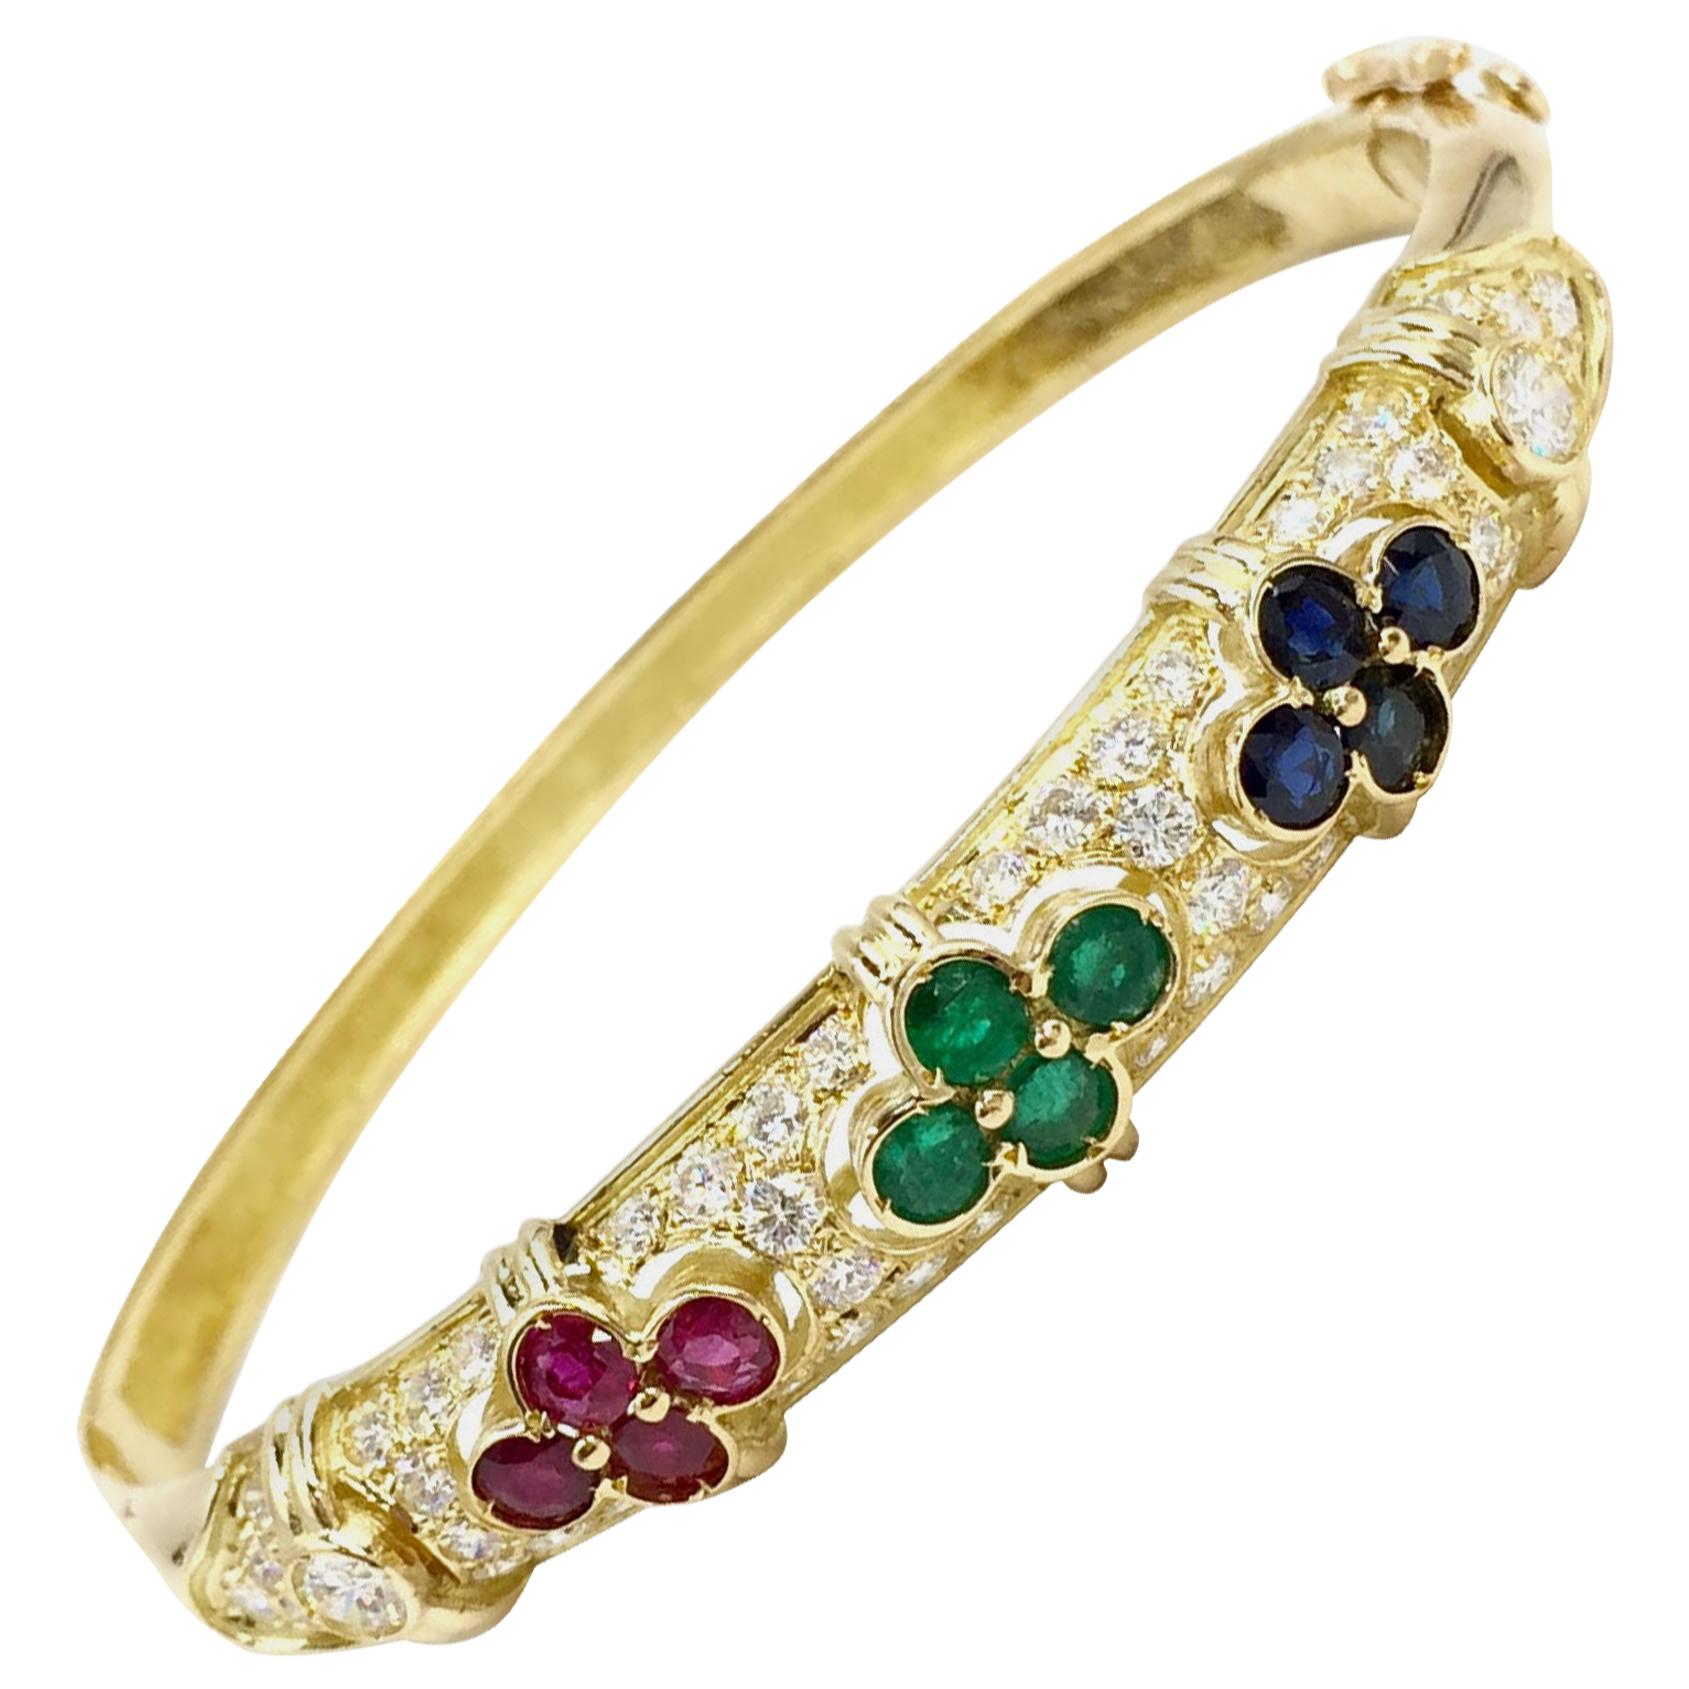 Vintage Diamond, Ruby, Emerald and Sapphire 18 Karat Bangle Bracelet